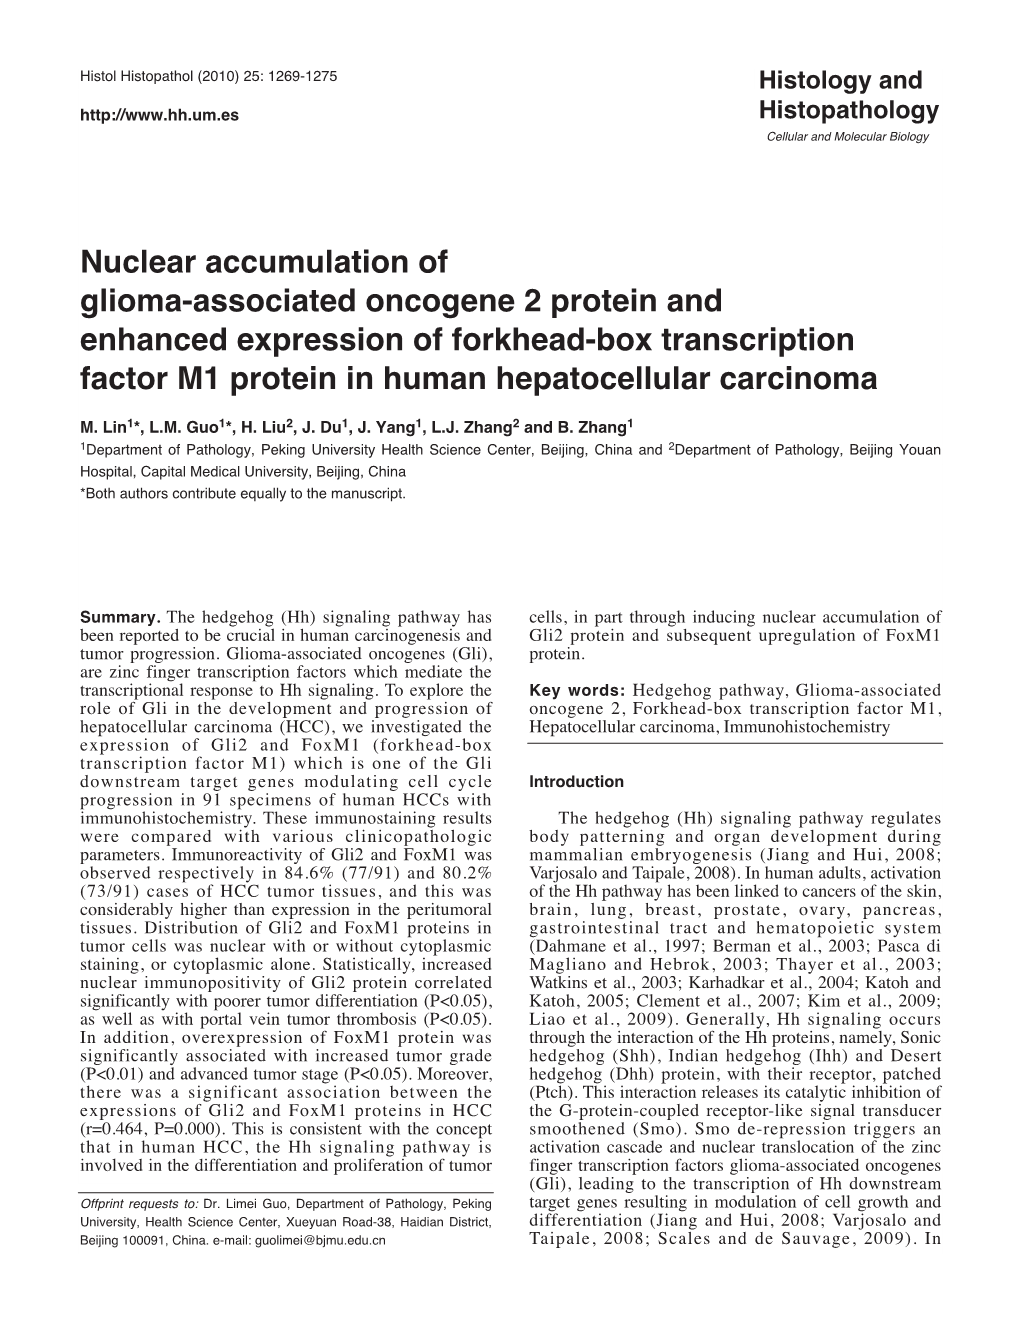 Nuclear Accumulation of Glioma-Associated Oncogene 2